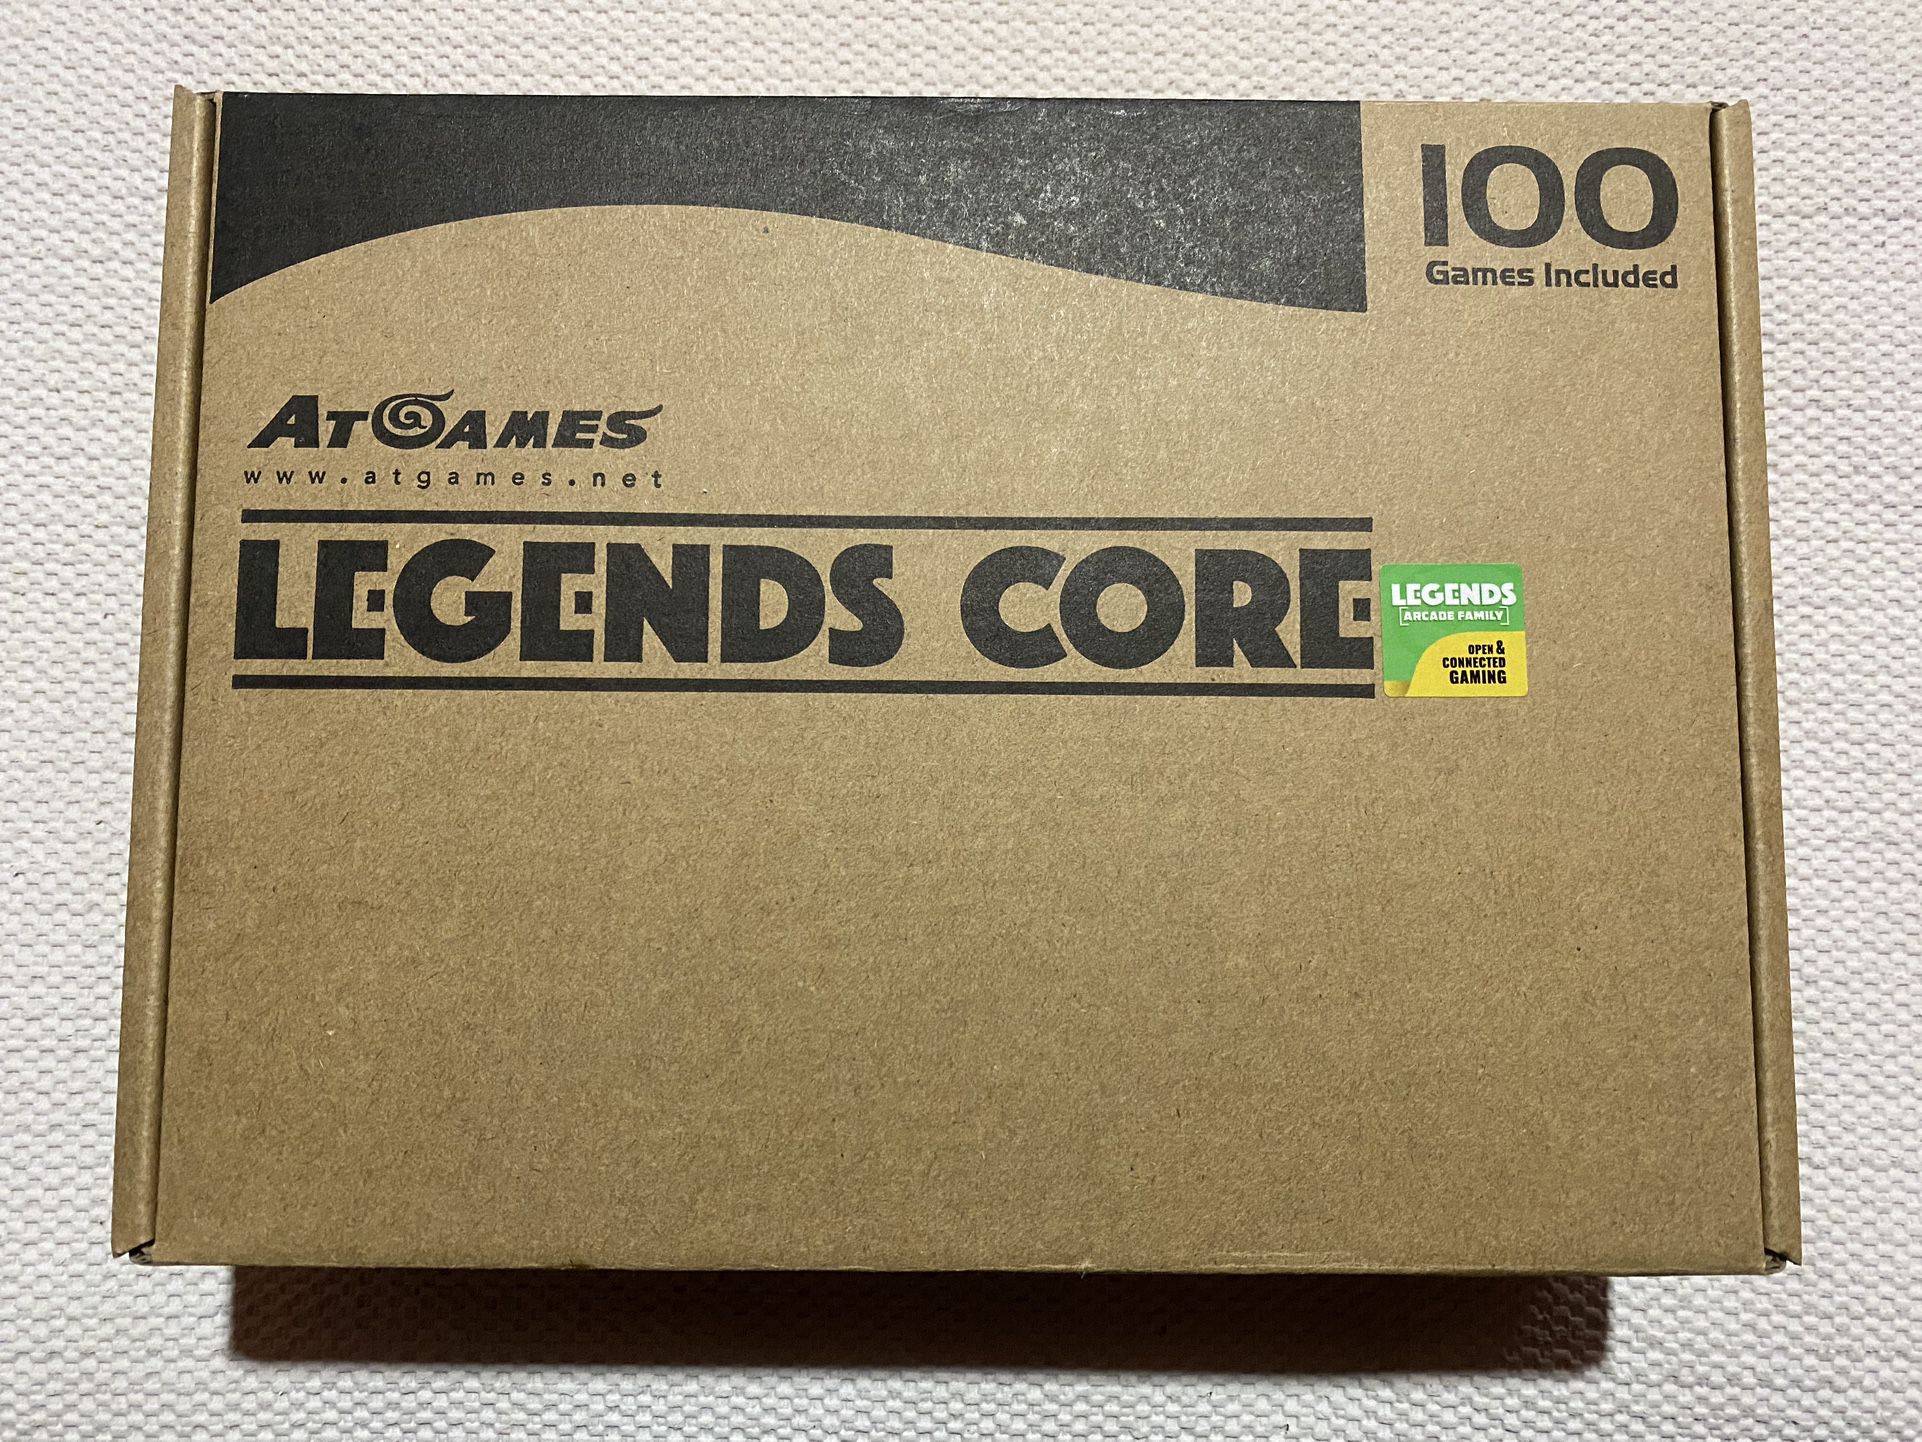 Legends Core Arcade Game Console